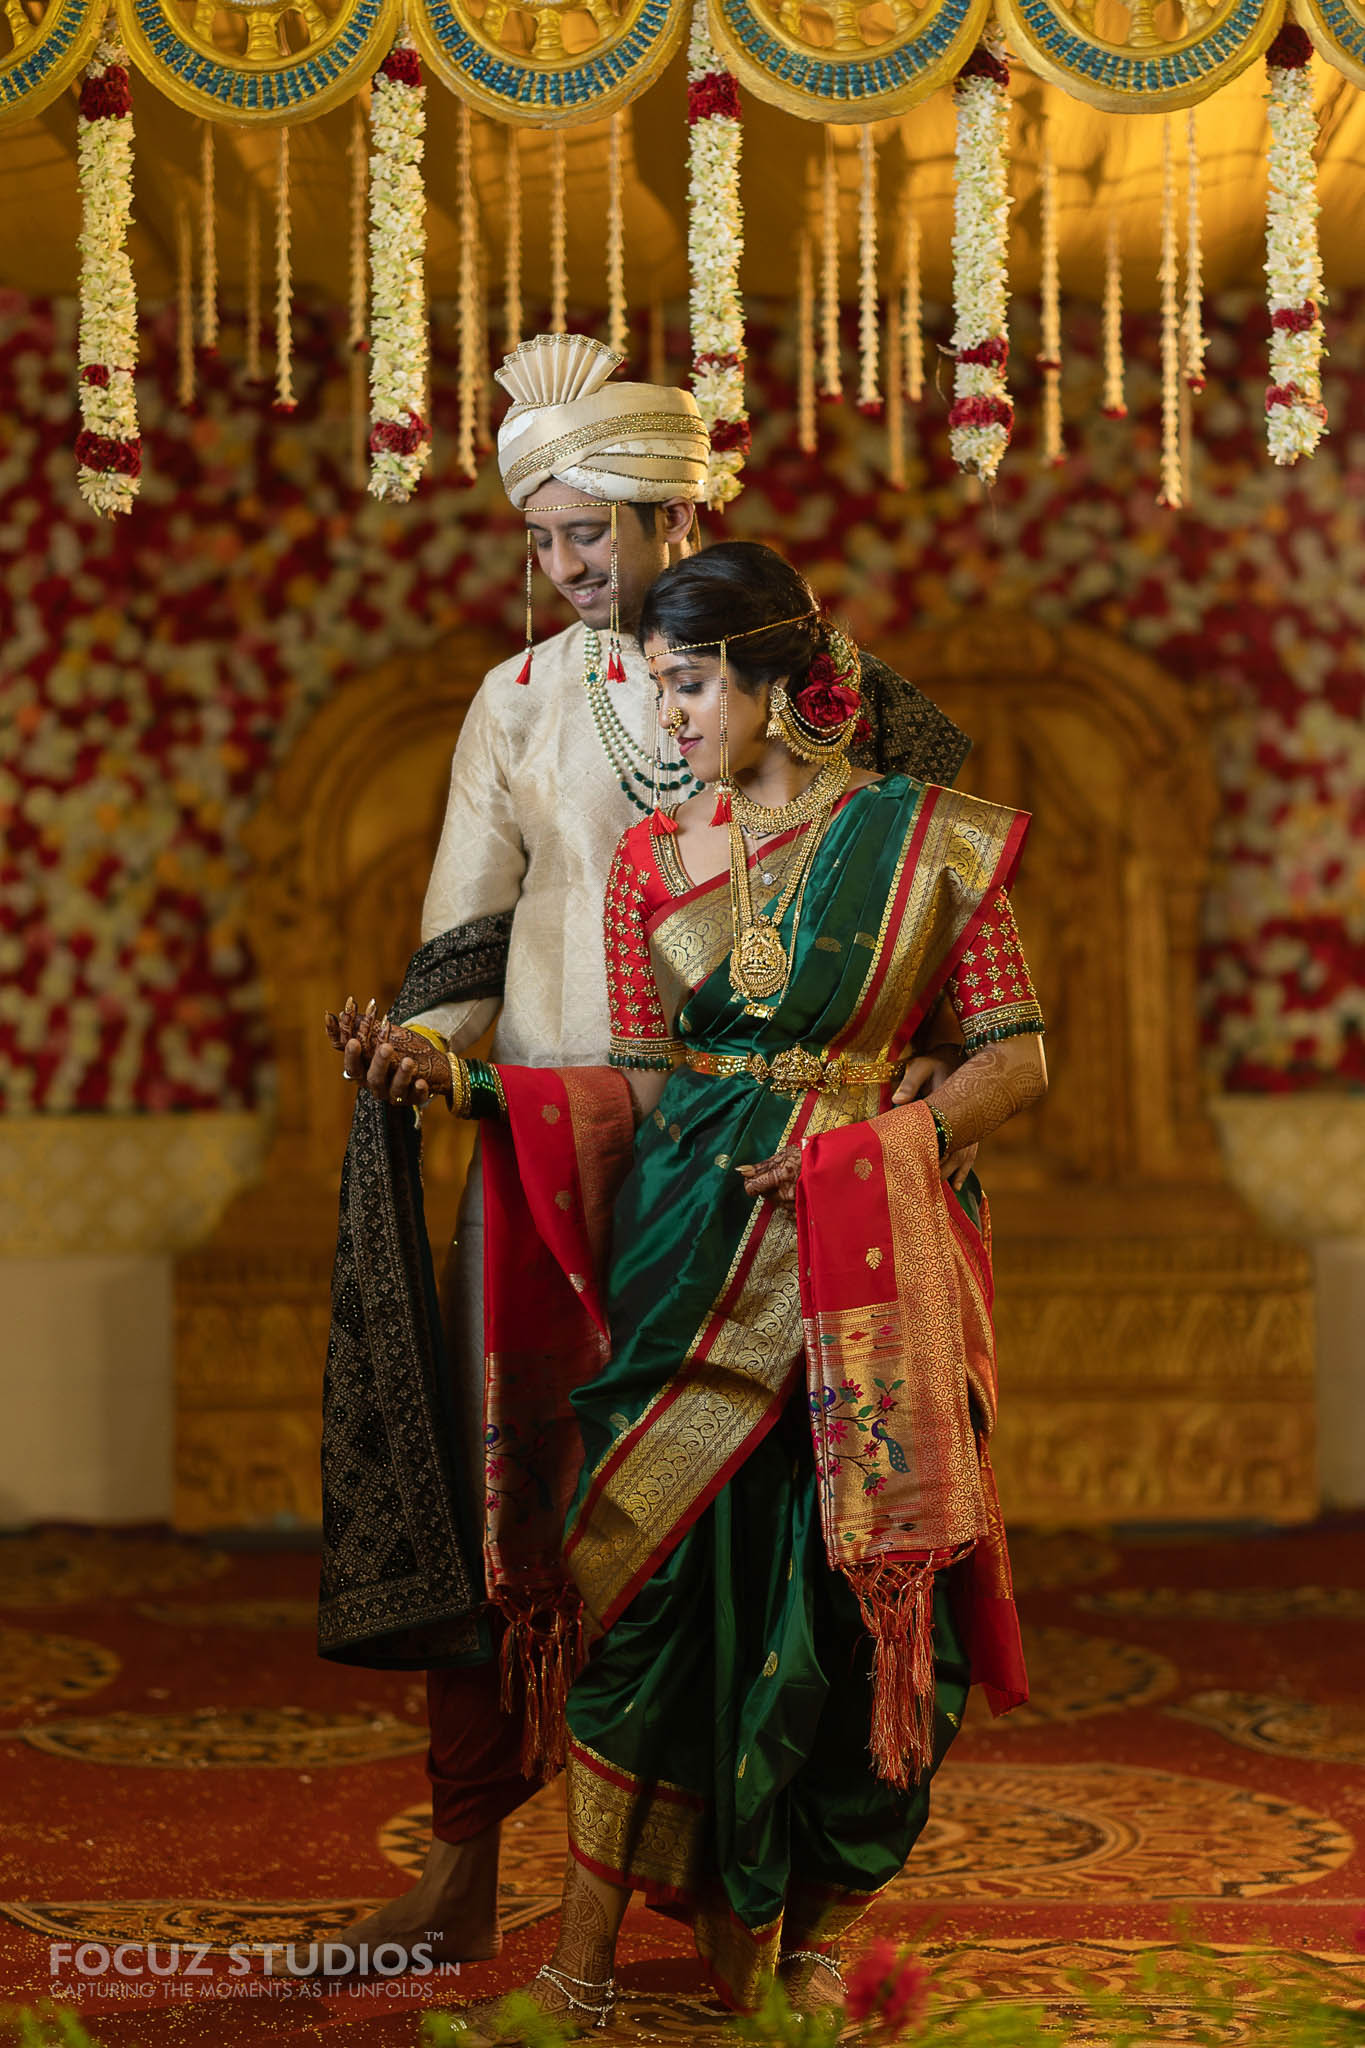 marwari-wedding-couple-photos-focuz-studios-49